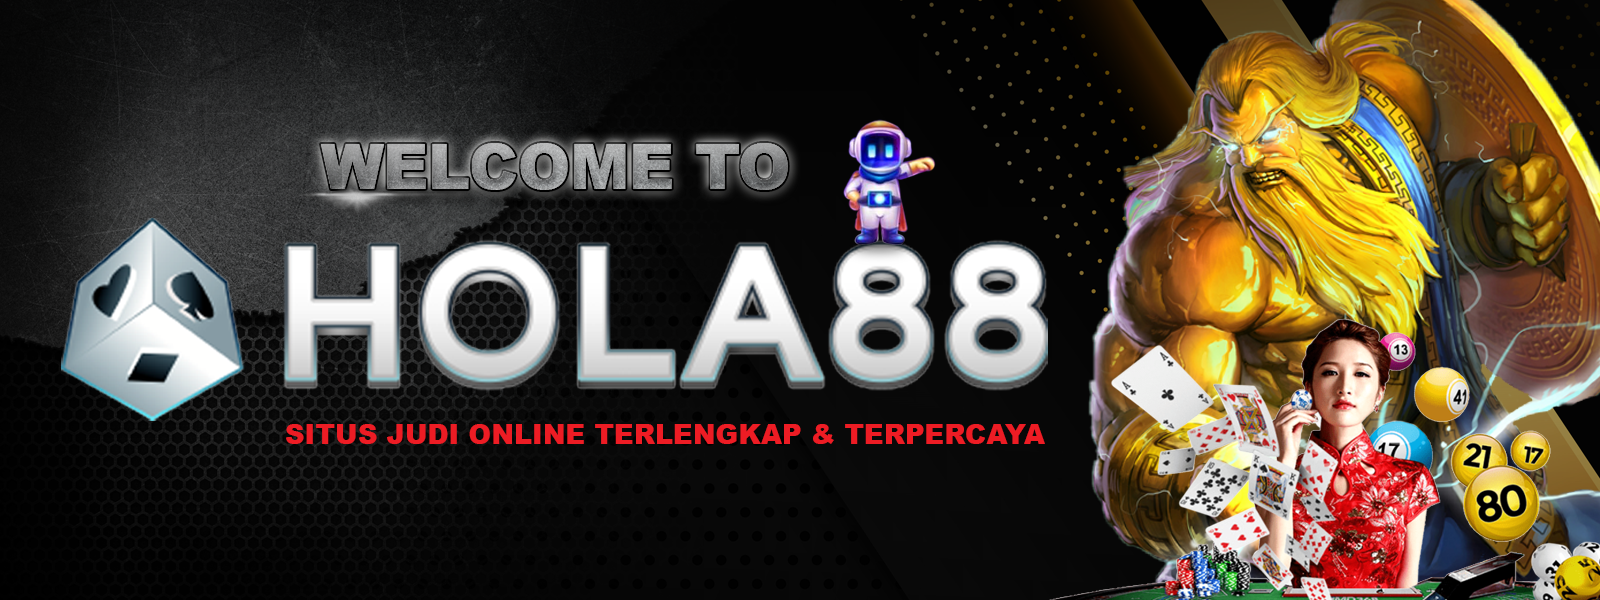 Welcome Hola88